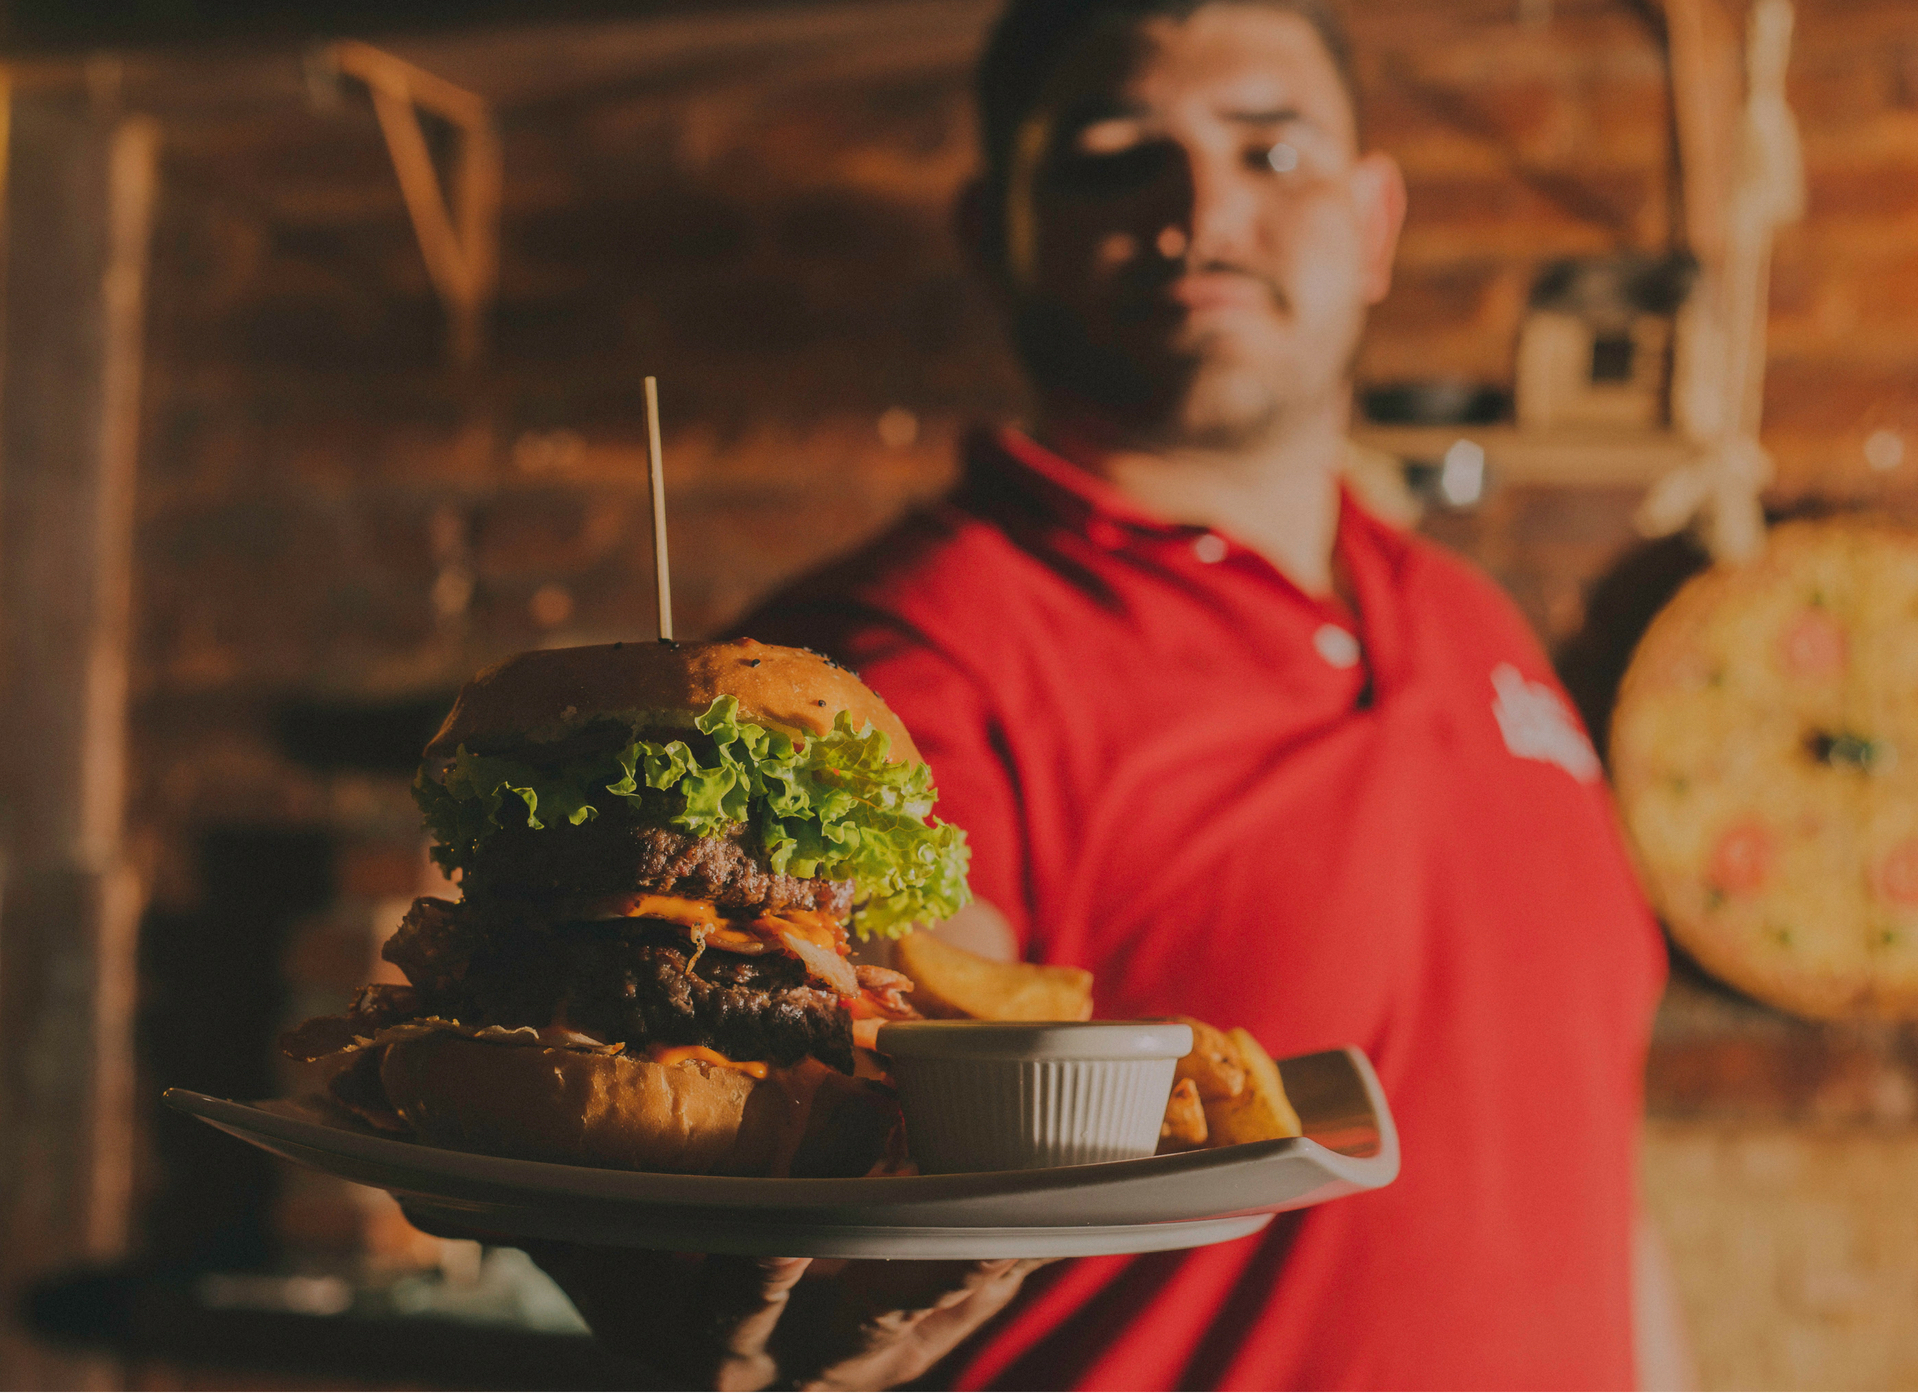 Restaurant server holding a burger on a plate